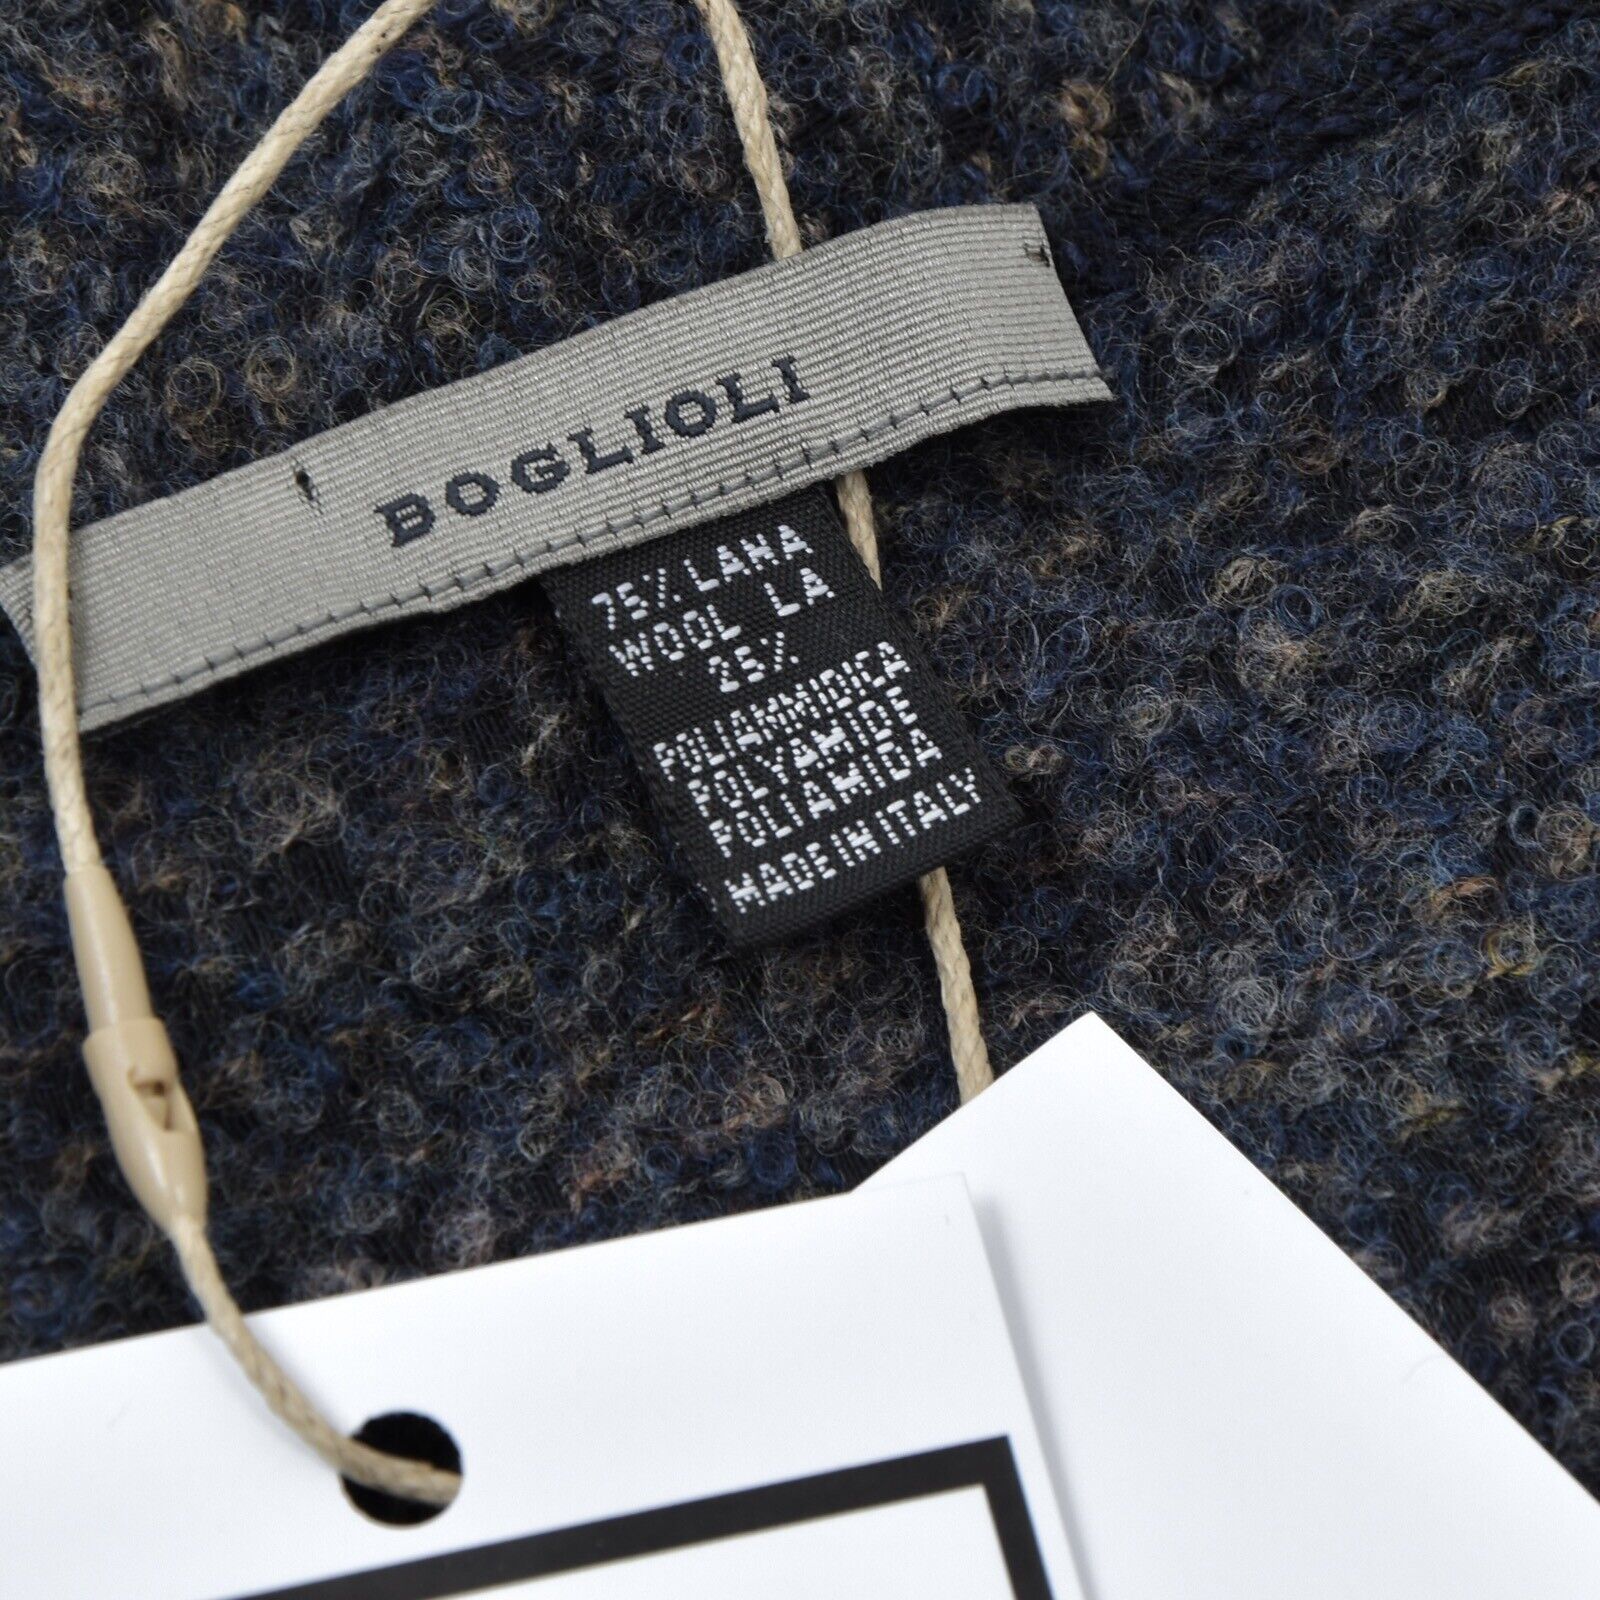 BOGLIOLI Schal Scarf Wolle Wool Made in Italy Blau Blue ca 179cm Herbst Autumn